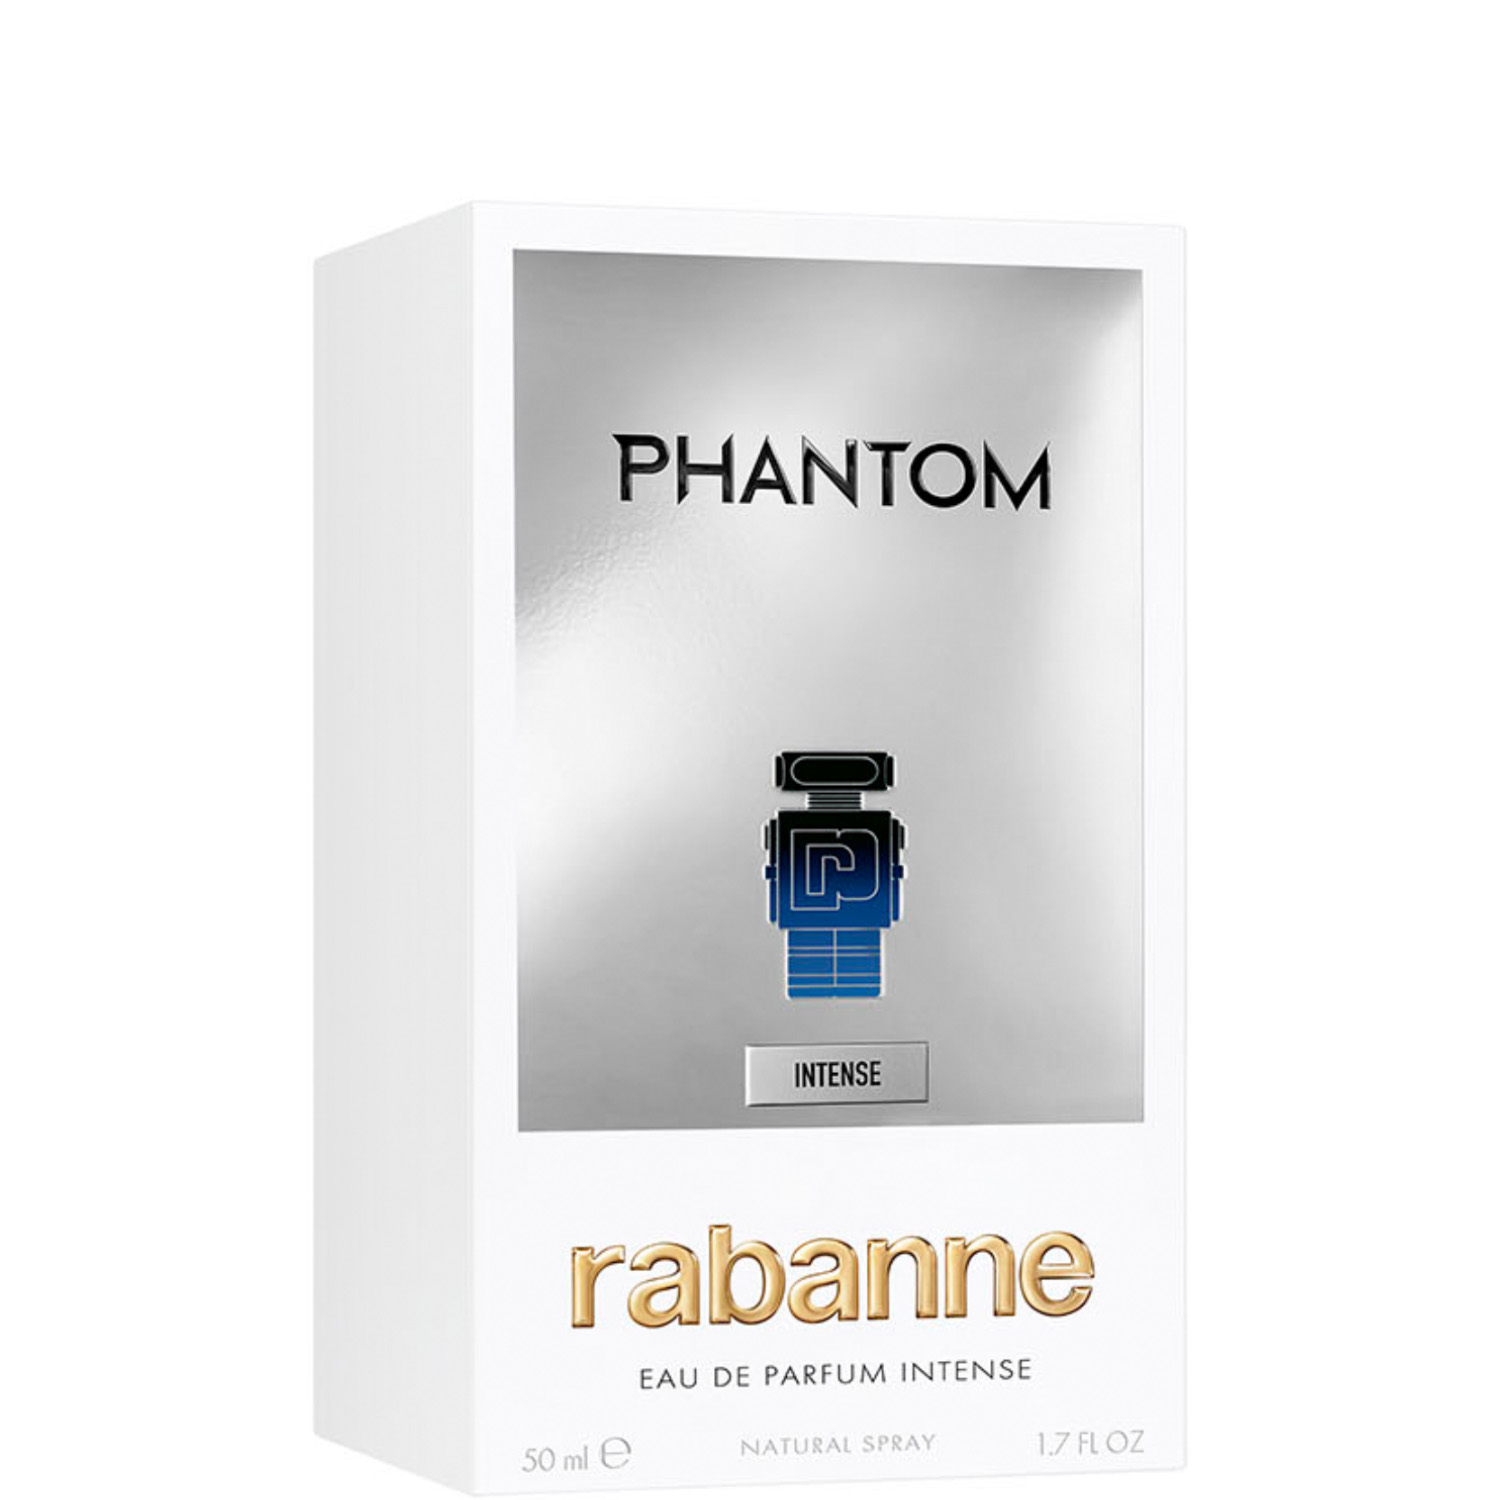 Rabanne Phantom Eau de Parfum Intense 50ml